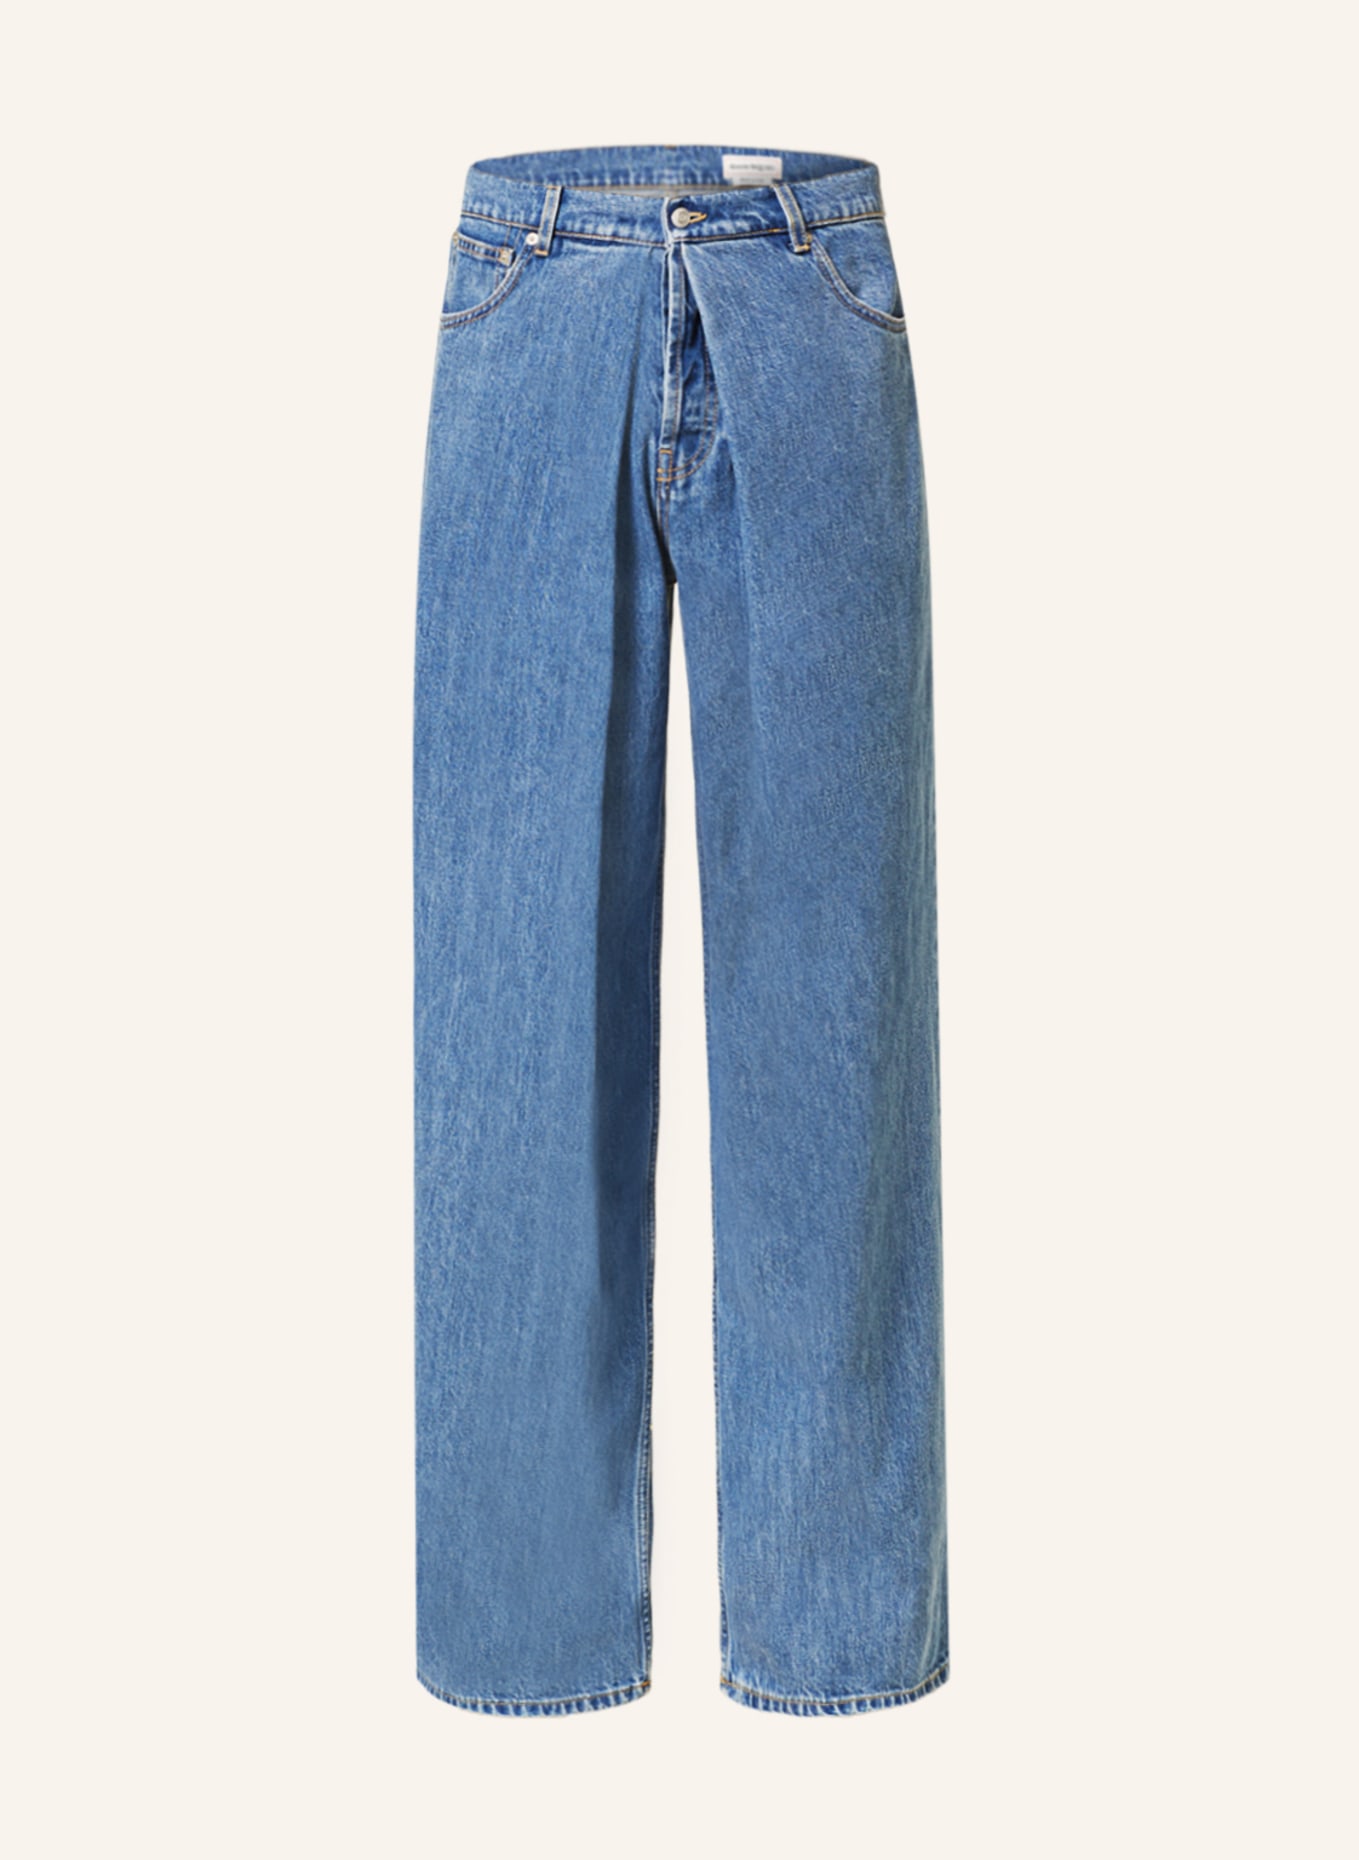 Alexander McQUEEN Jeans Regular Fit, Farbe: 4001 BLUE WASHED (Bild 1)